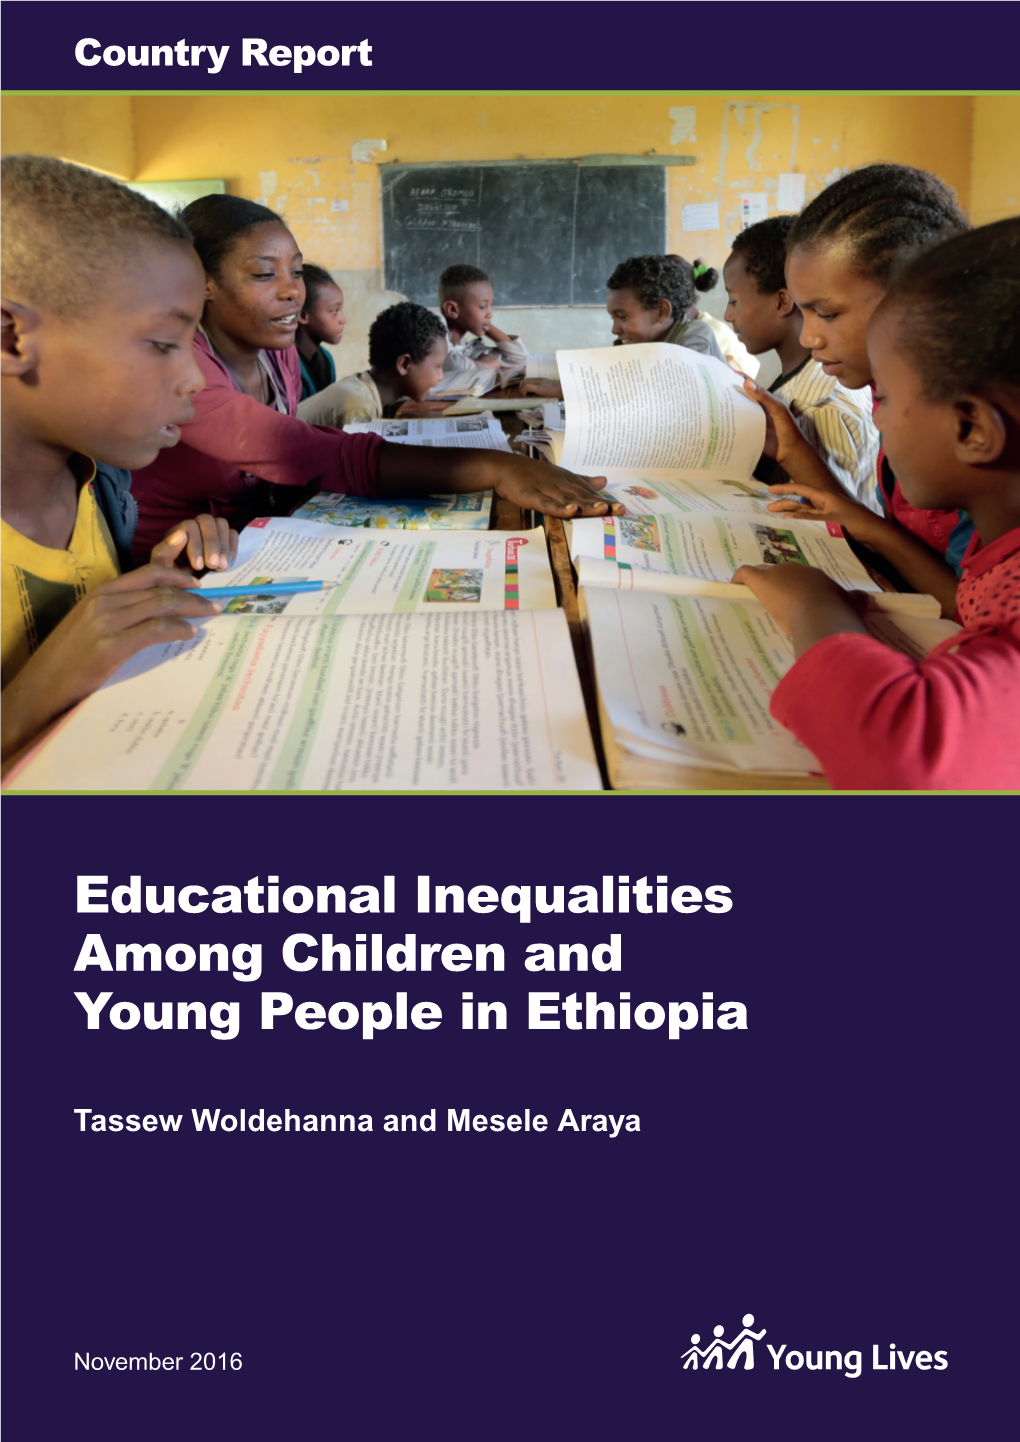 Educational Inequalities Among Children and Young People in Ethiopia